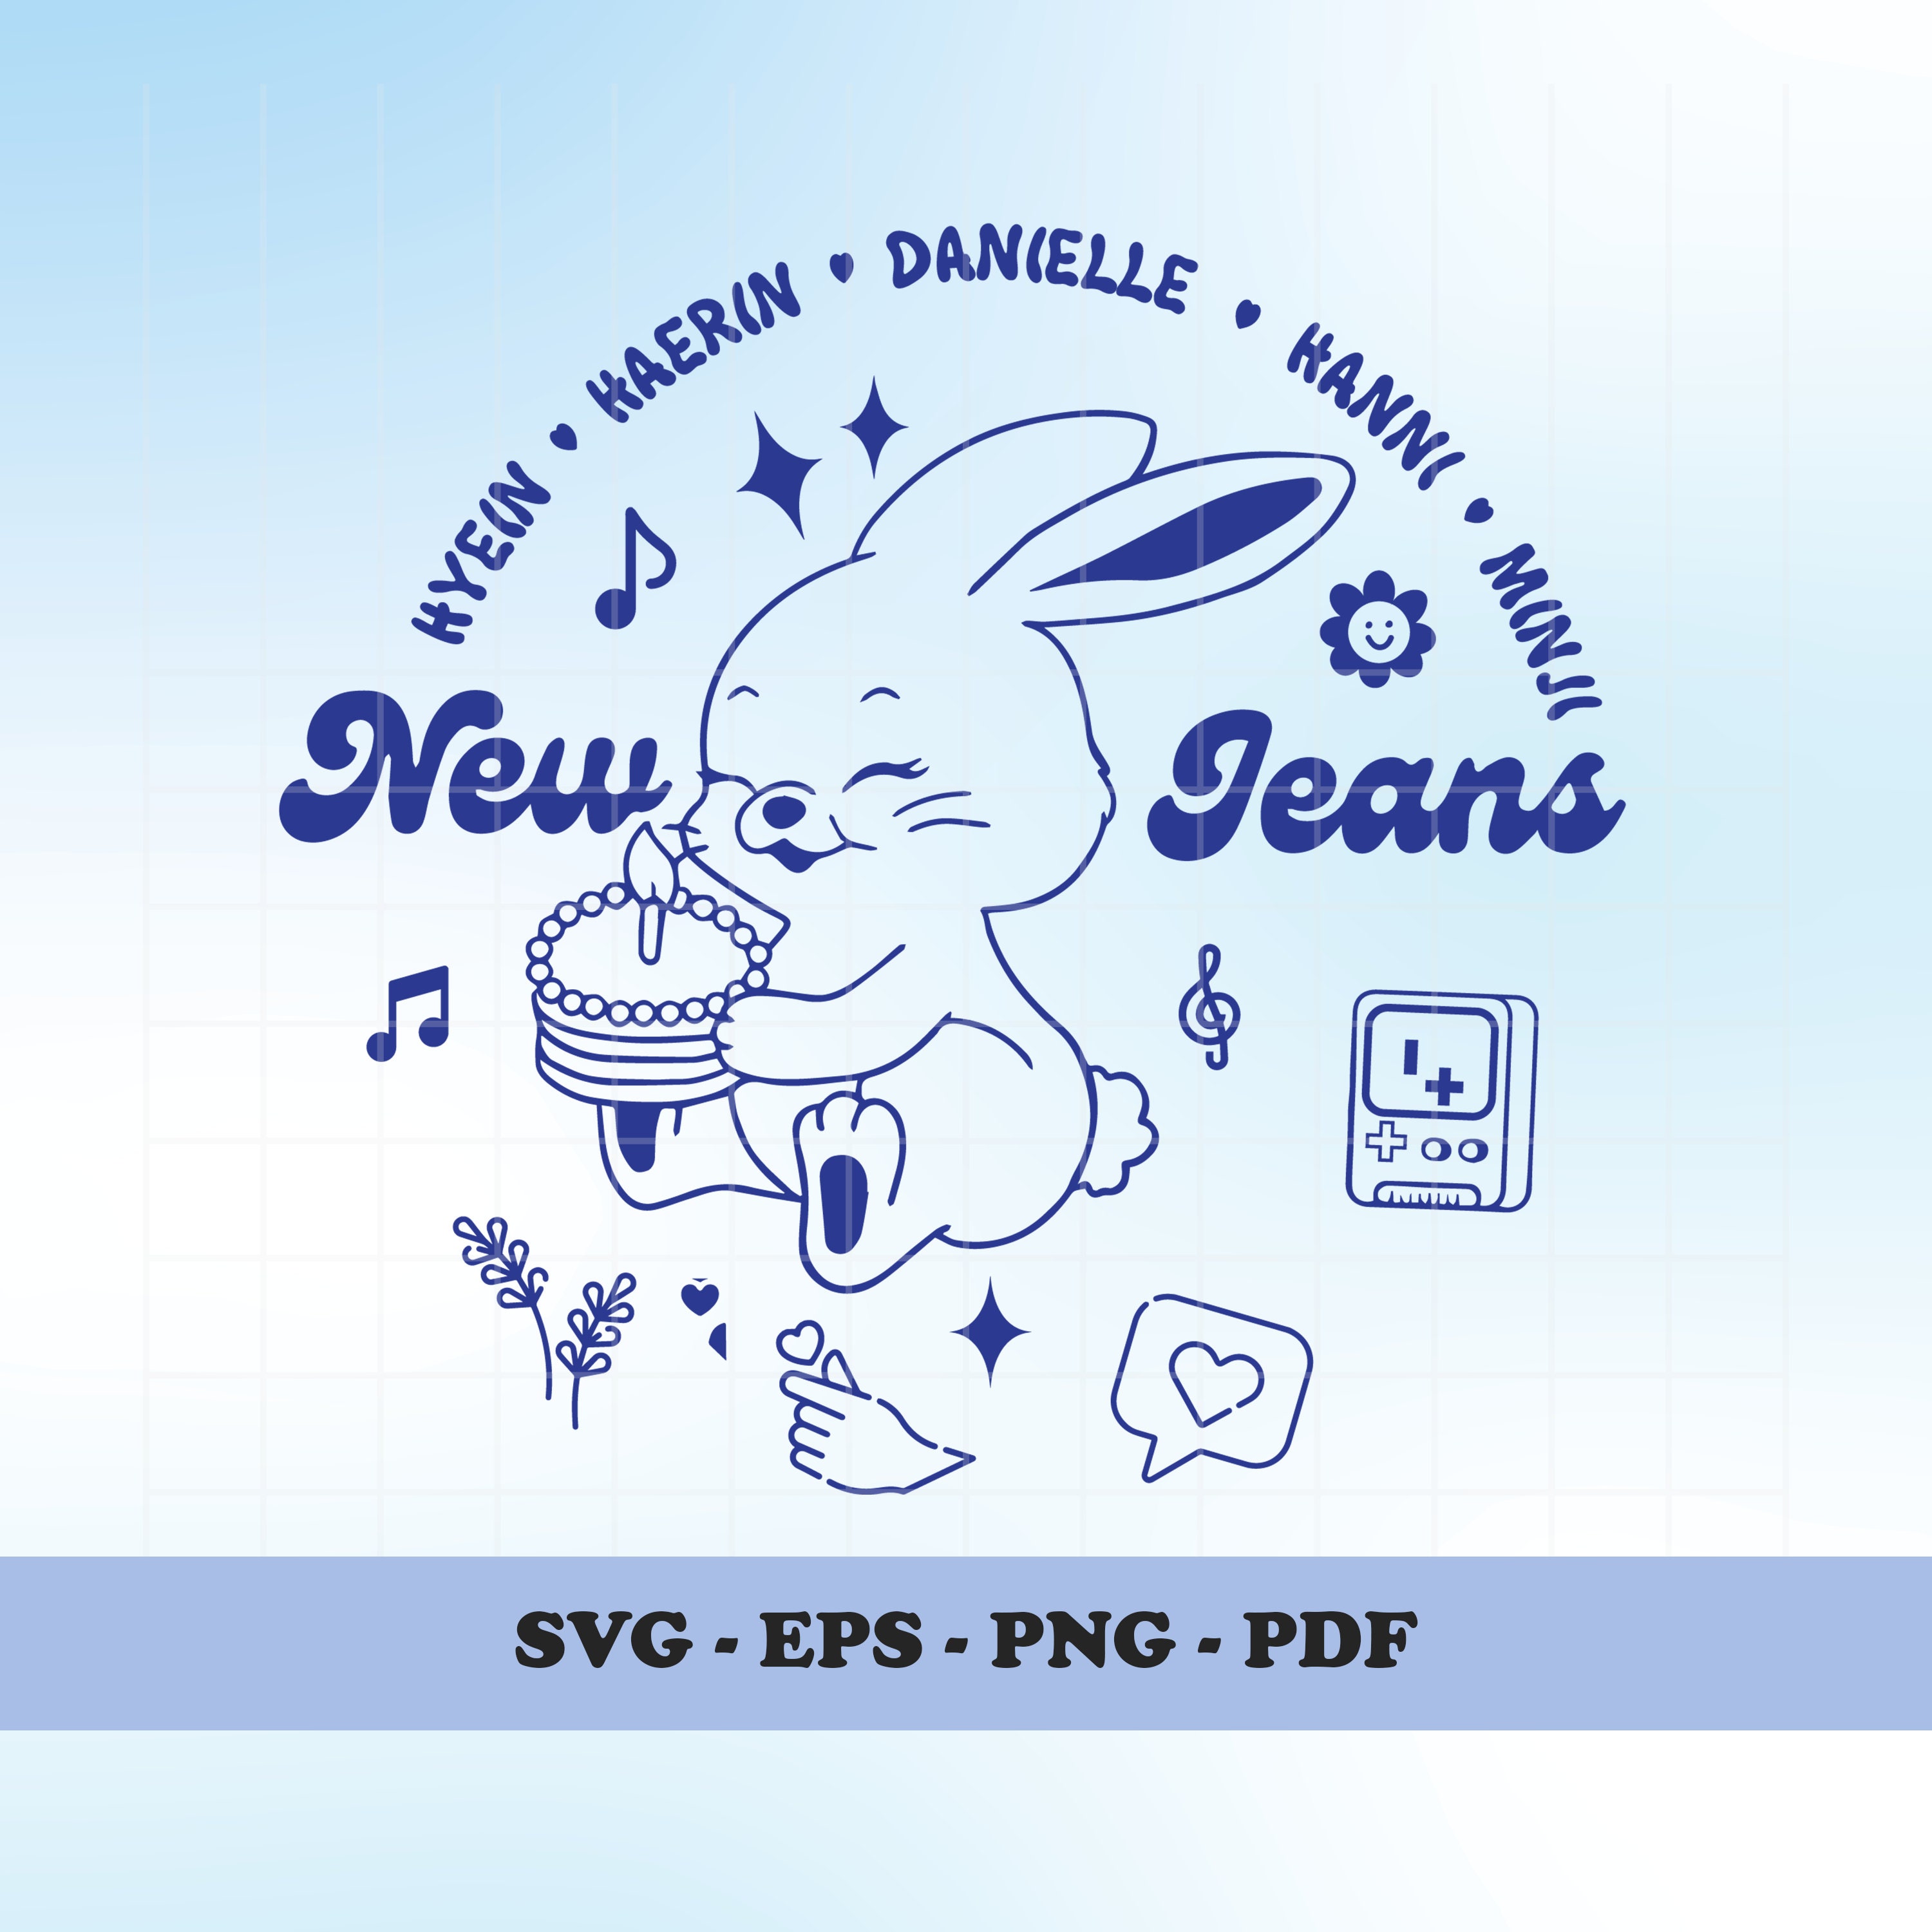 New Jeans Signatures BUNDLE SVG Cut File for Cricut, Silhouette, Clipart,  PNG, Silhouette, Logos, Vinyl Prints, Tshirt Prints, Stickers -  Israel